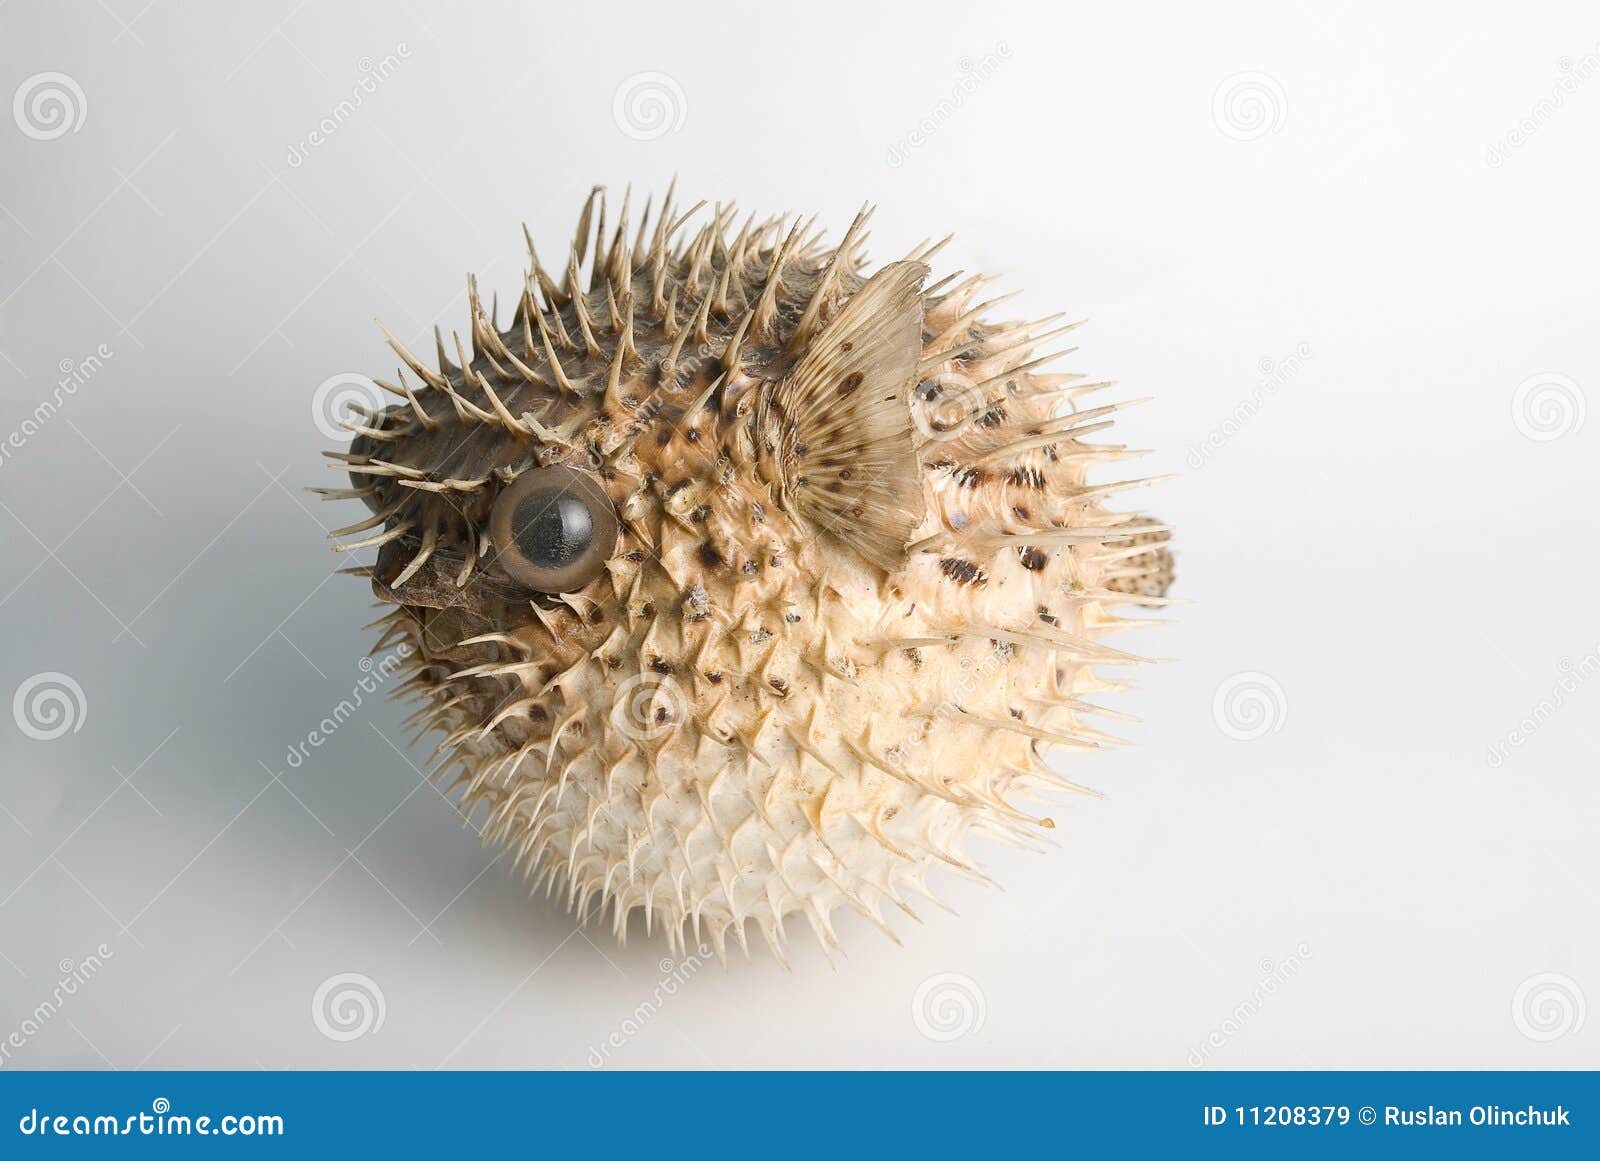 porcupine fish